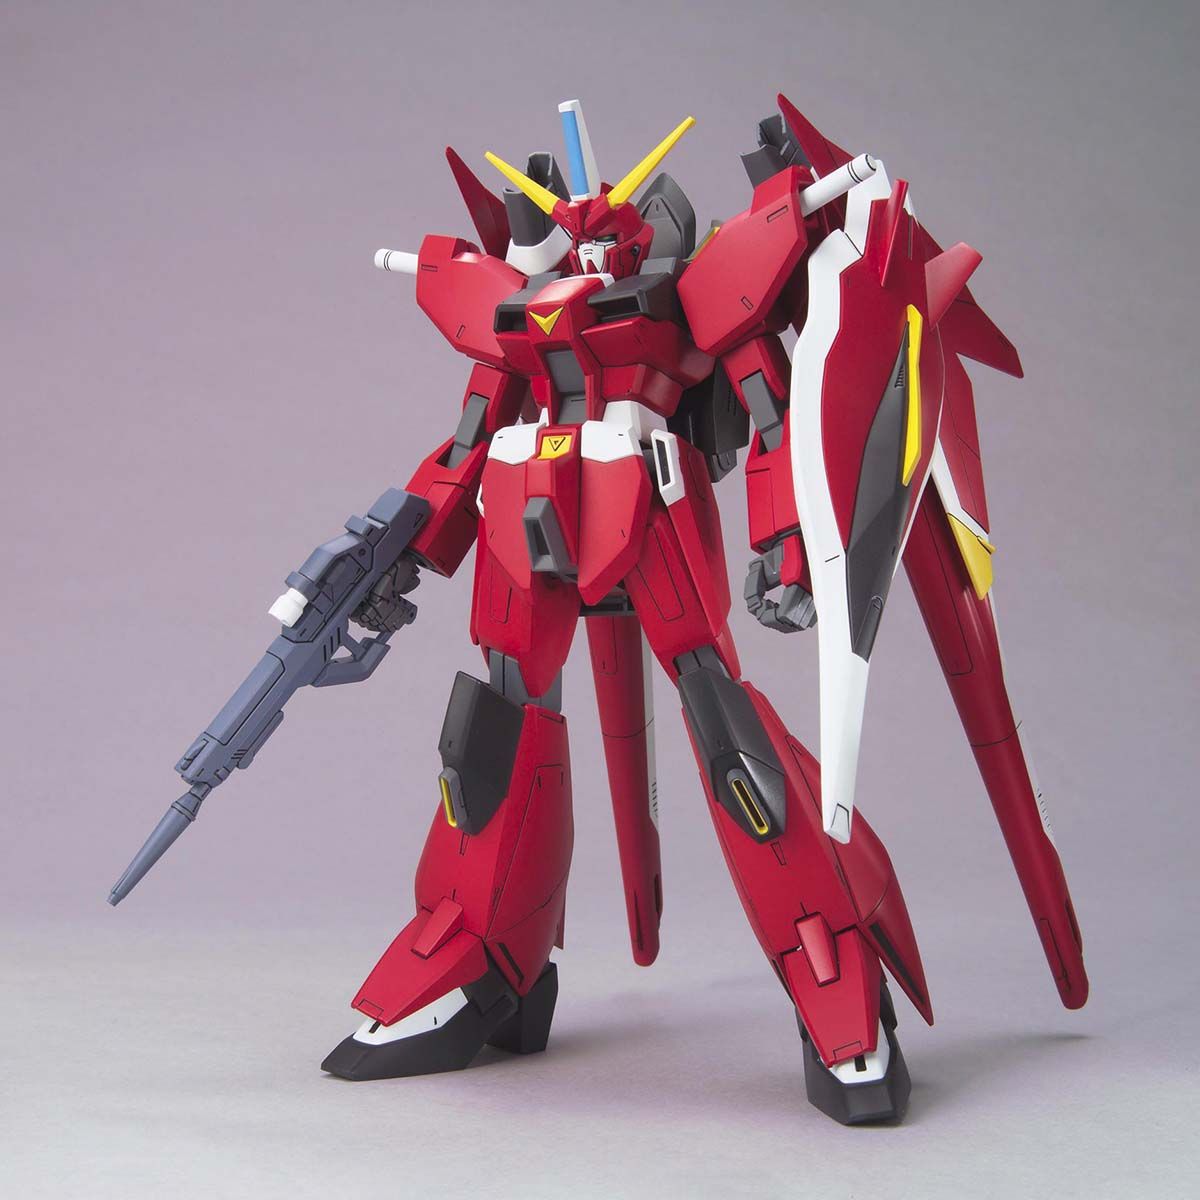 HG 1/100 #14 Saviour Gundam